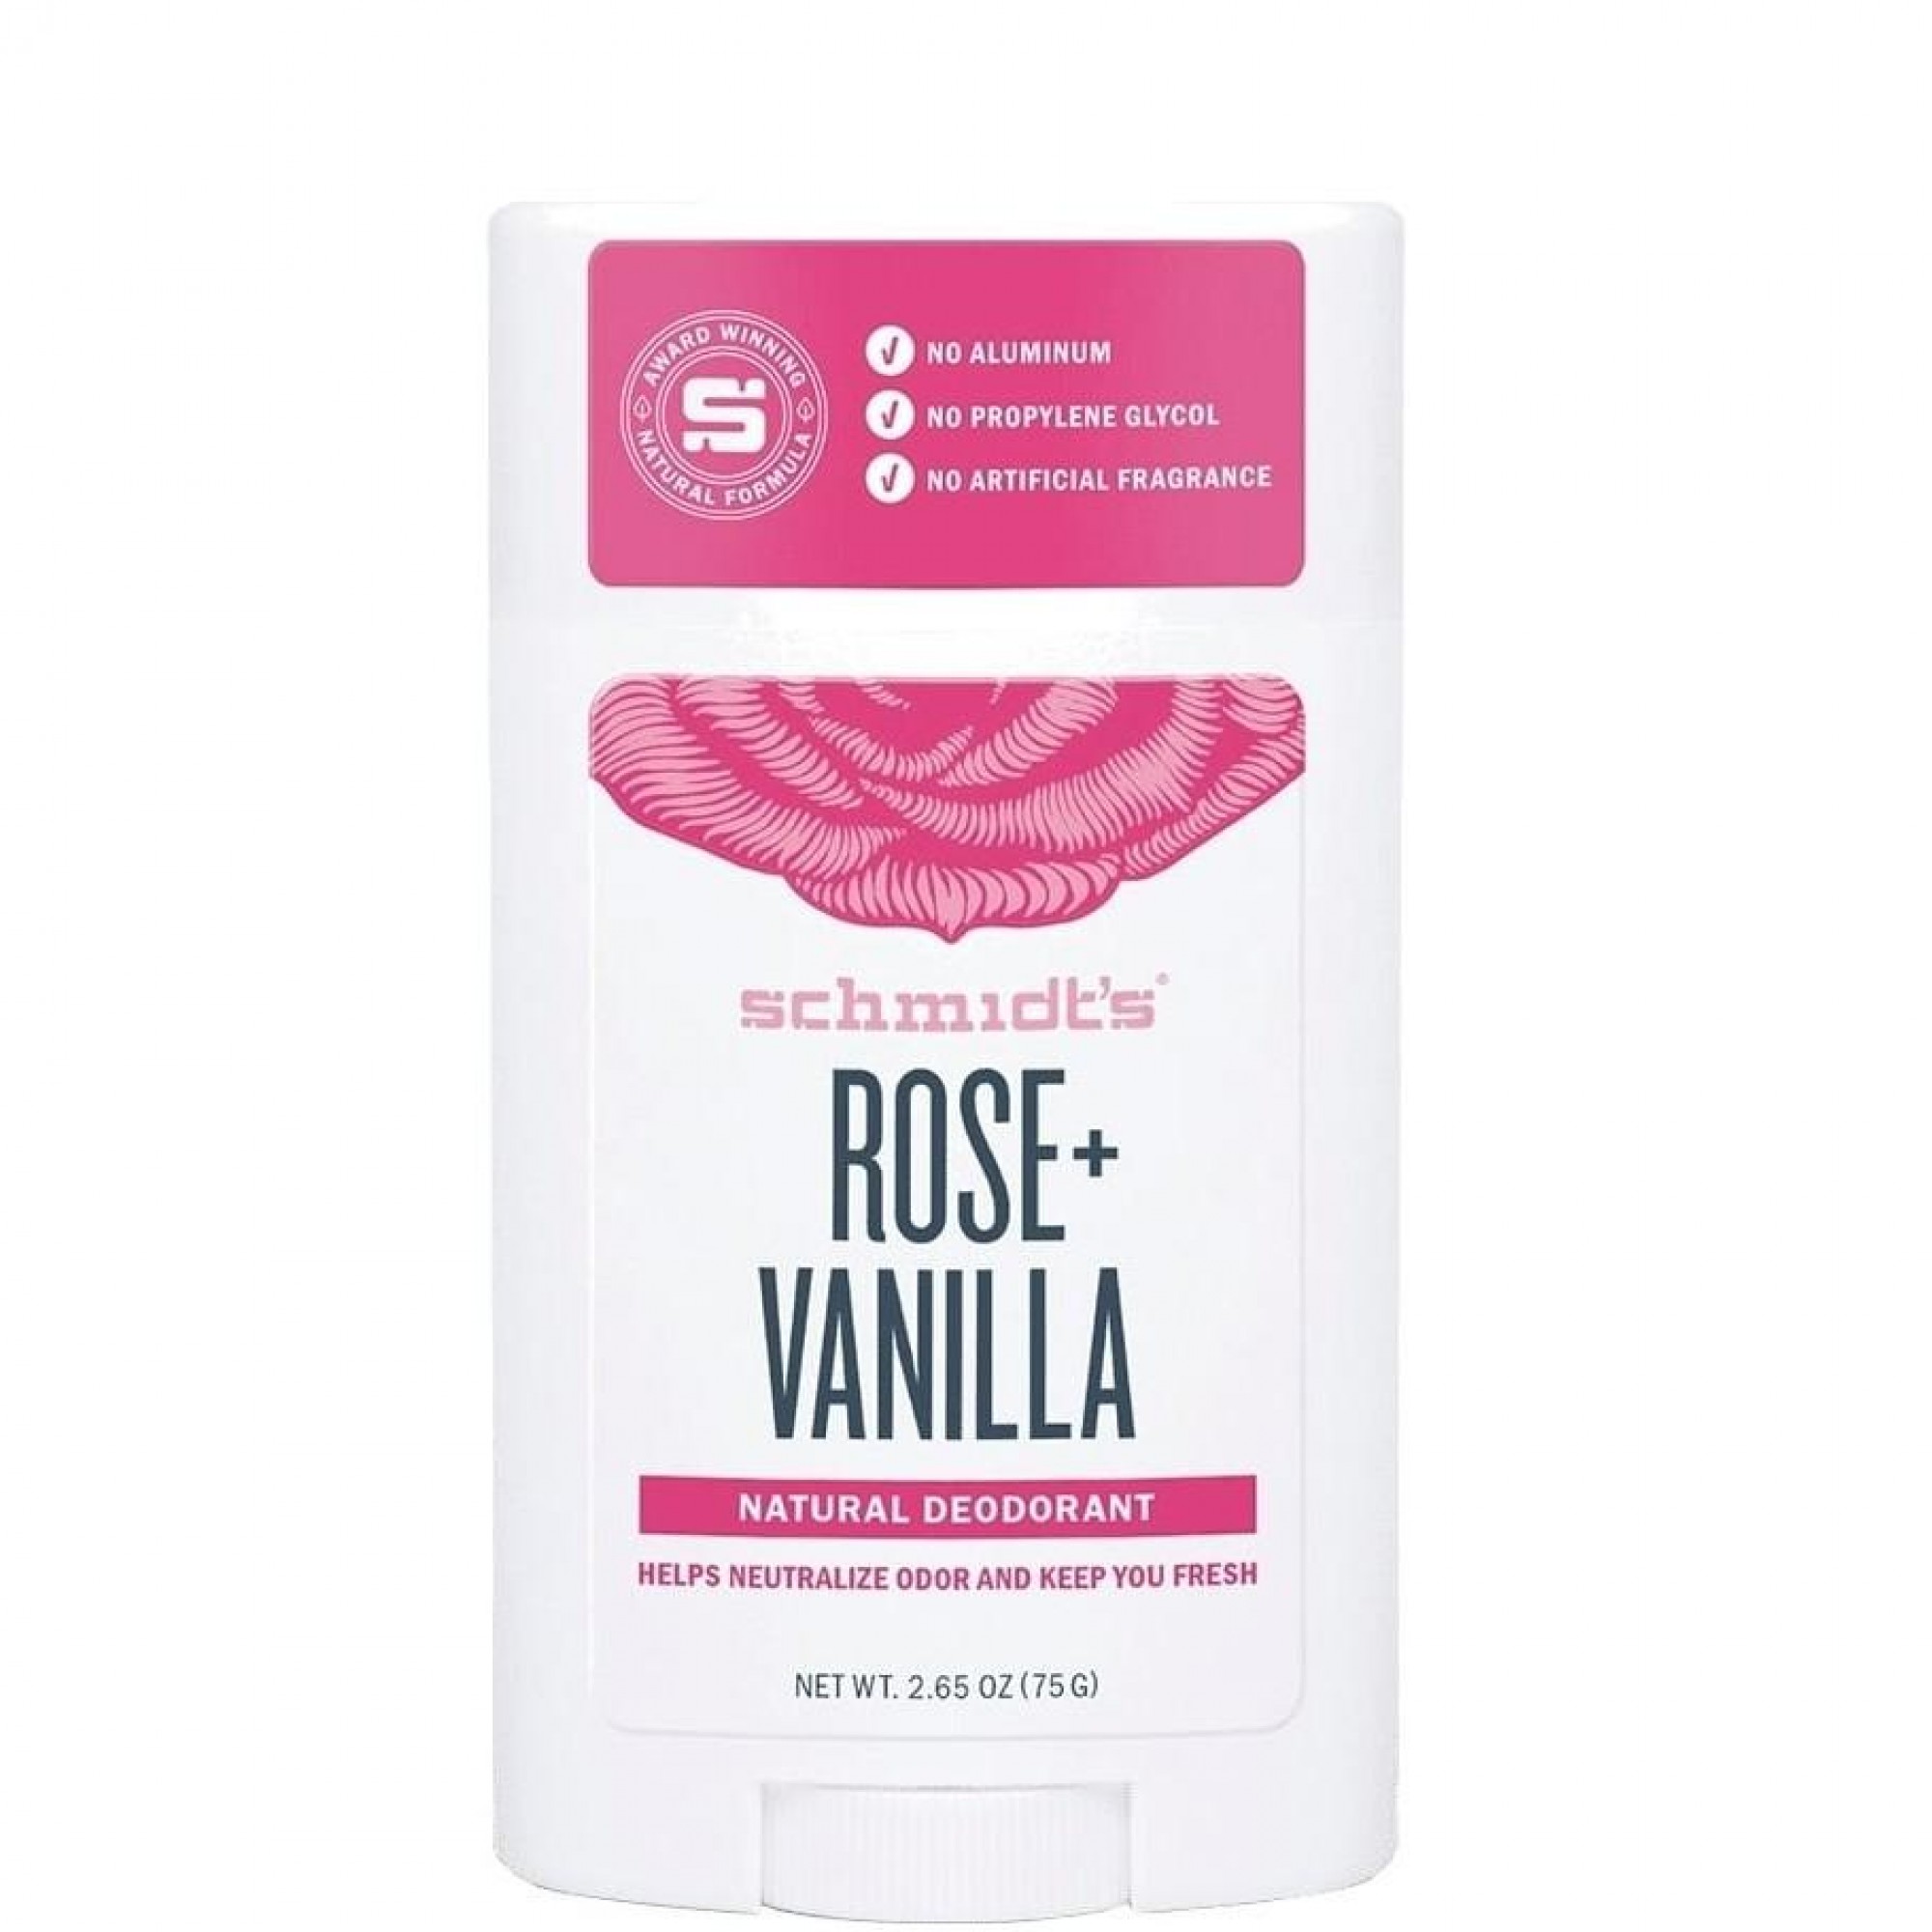 Schmidt's Naturals Deodorant Rose + Vanilla